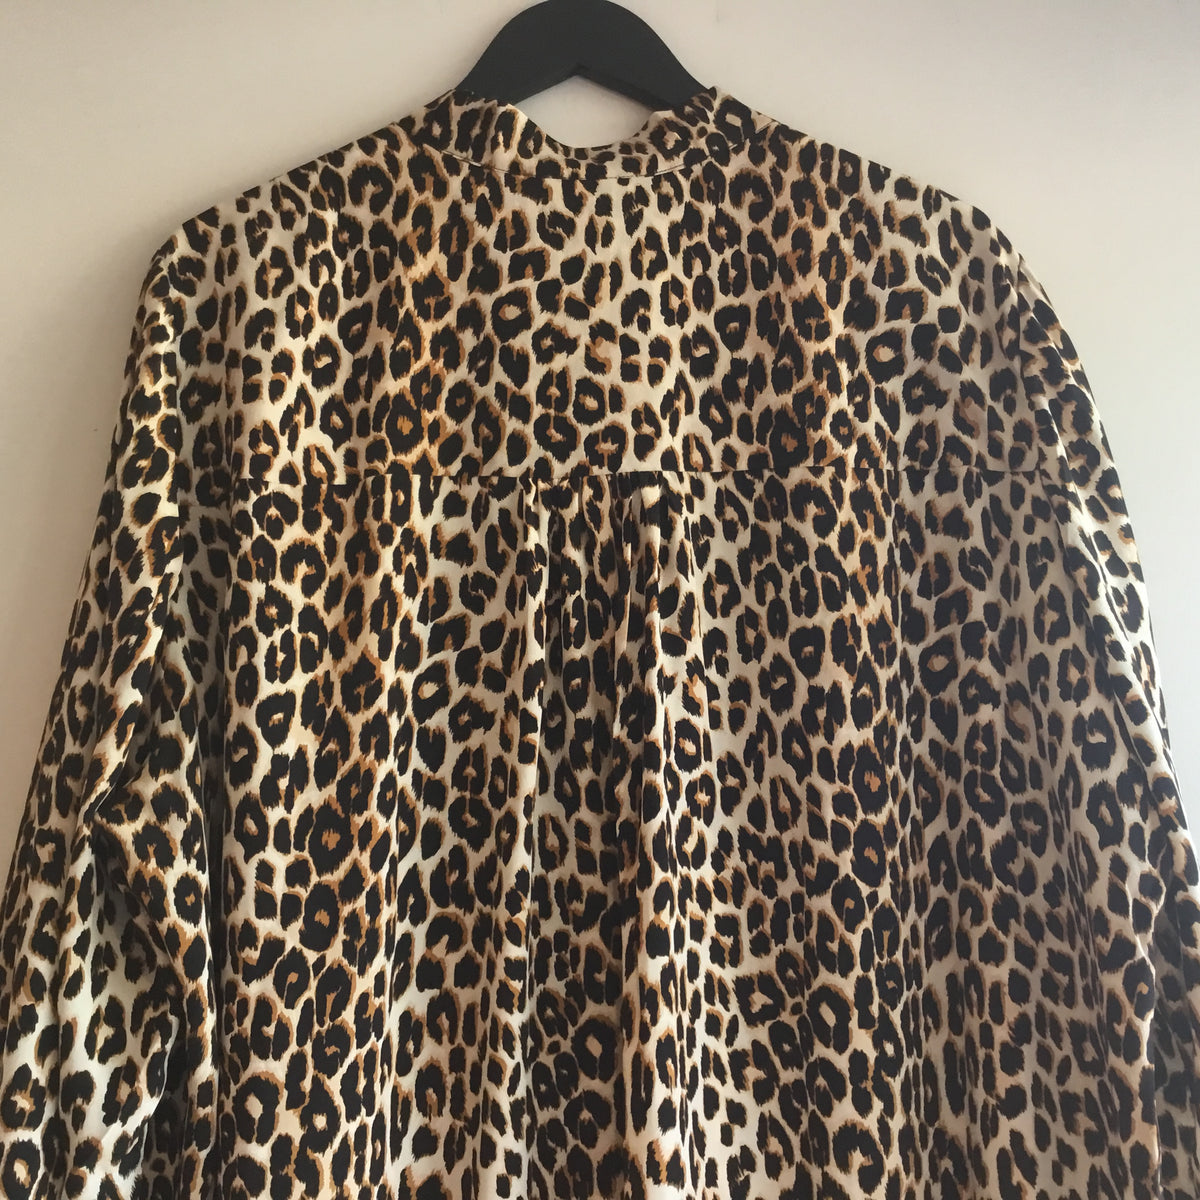 Anna Scholz silk tie leopard print dress Natural/Tan/Blk Size 24